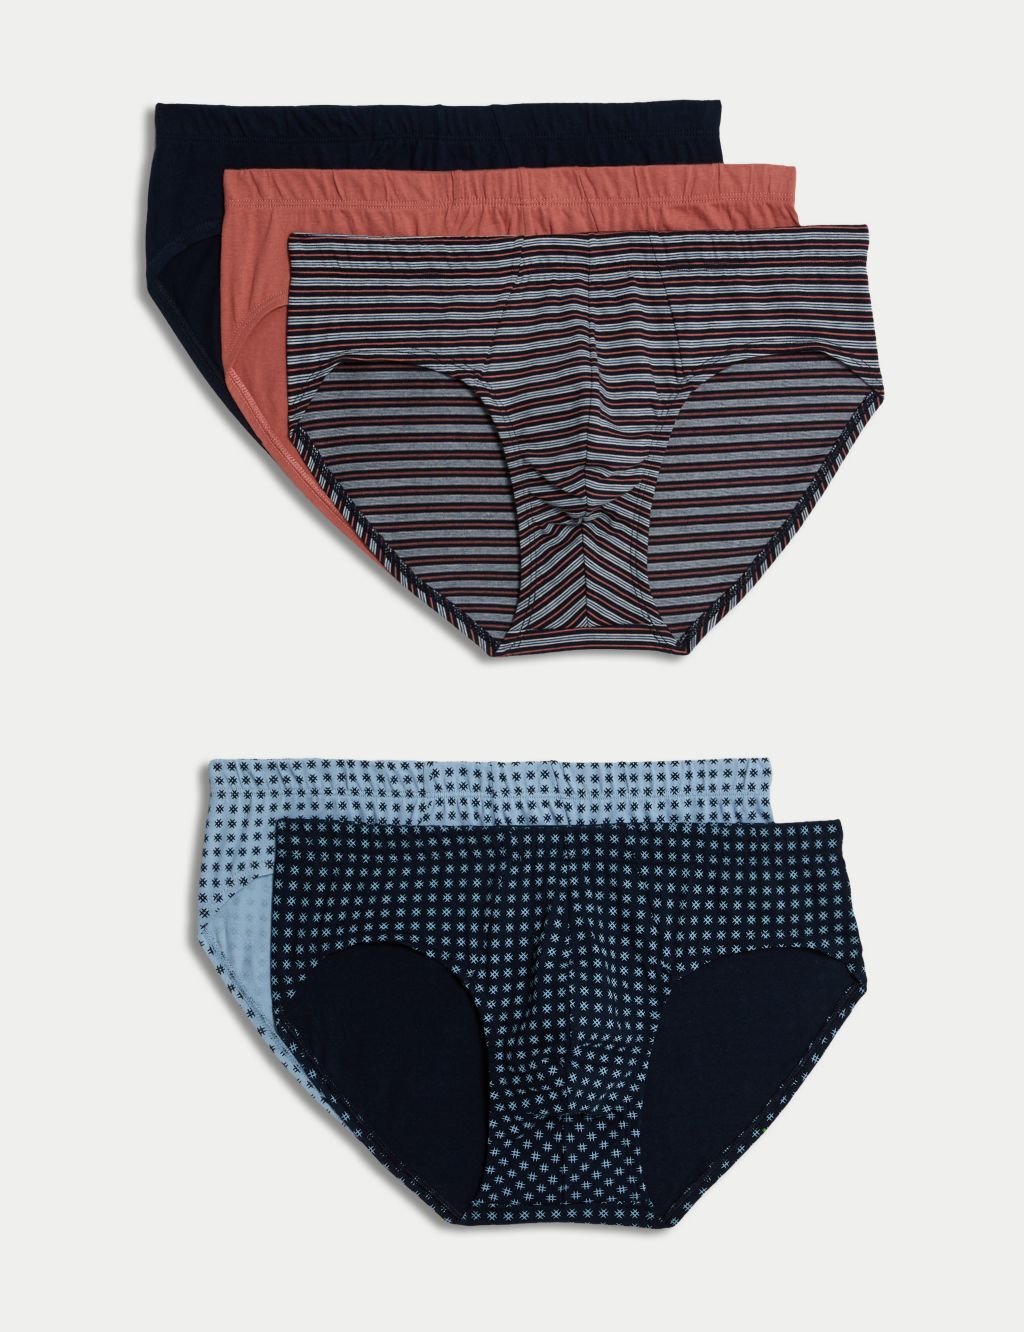 Fruit Of The Loom Women's Tag Free Cotton Bikini Panties, 10 Pack -  Assorted Colors, 7 price in UAE,  UAE